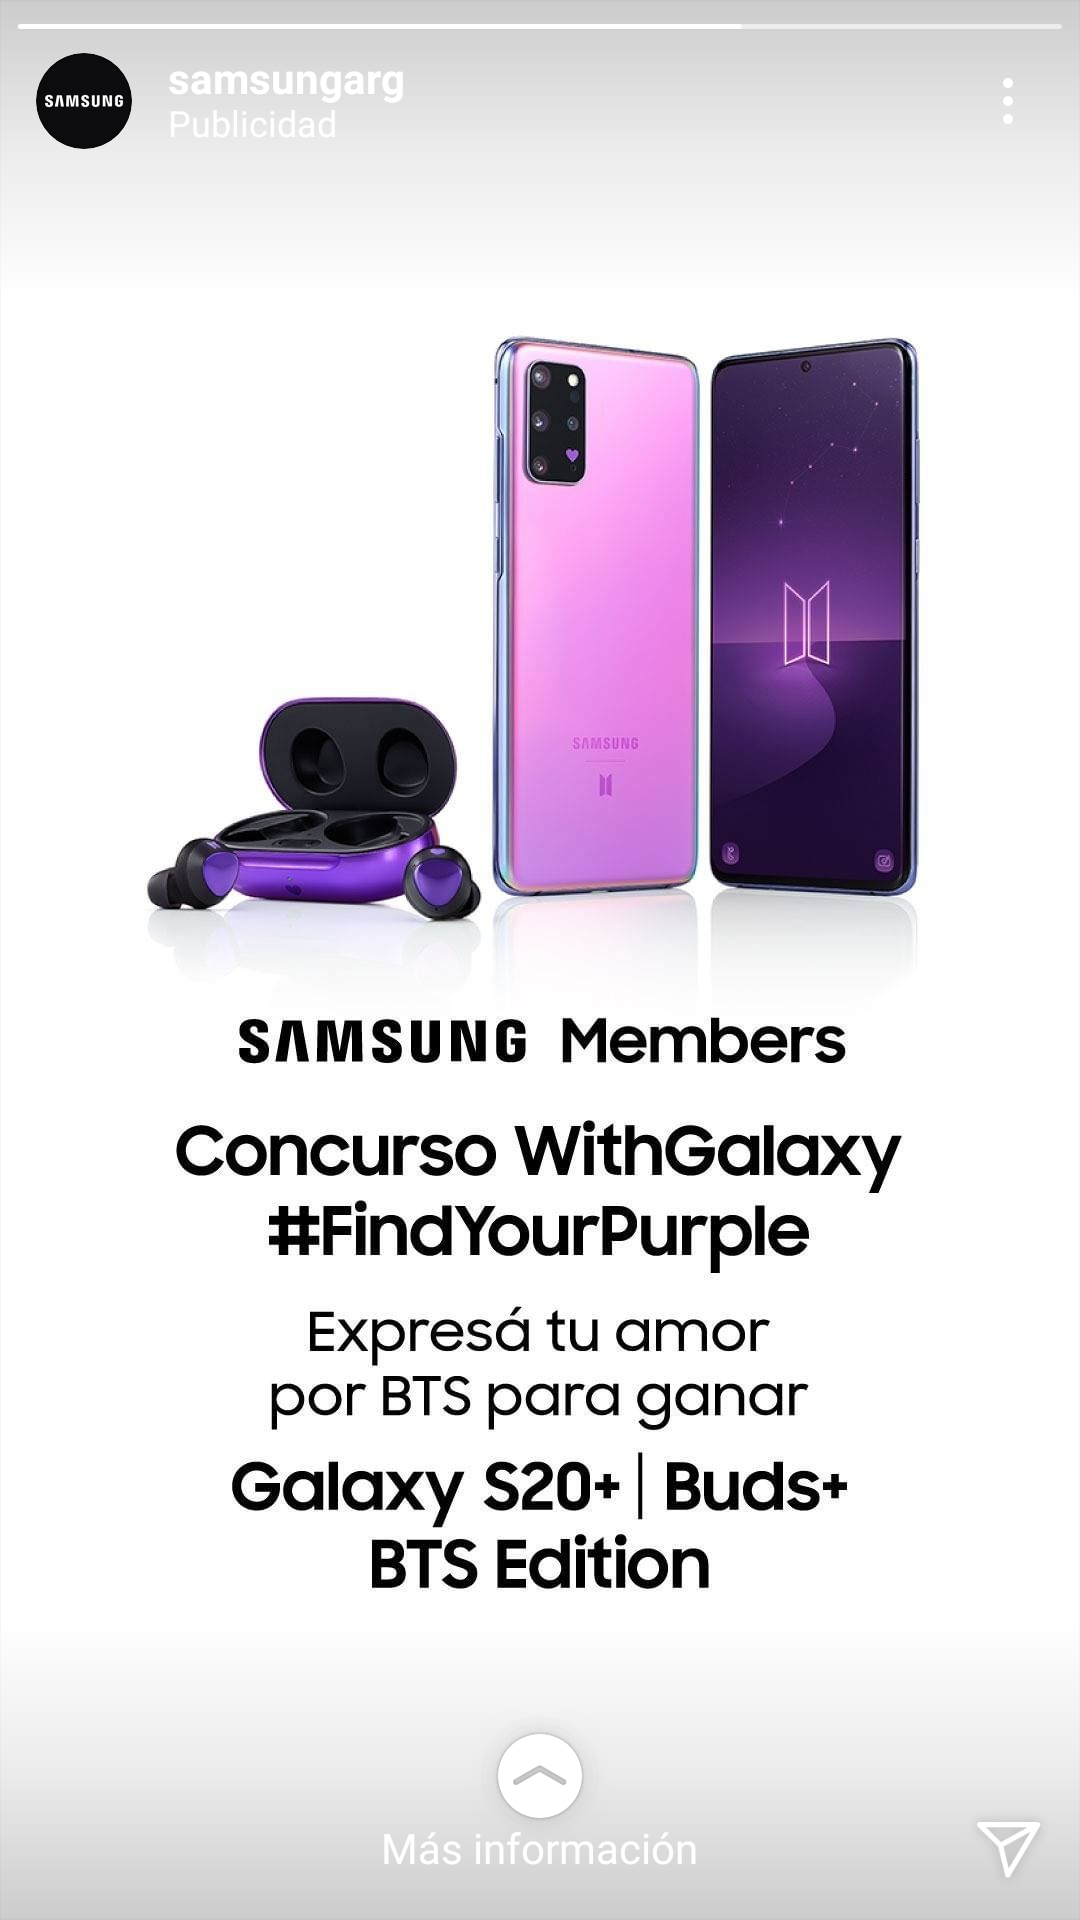 Samsung Galaxy S20+ / Buds+ BTS EDITION - Samsung Members